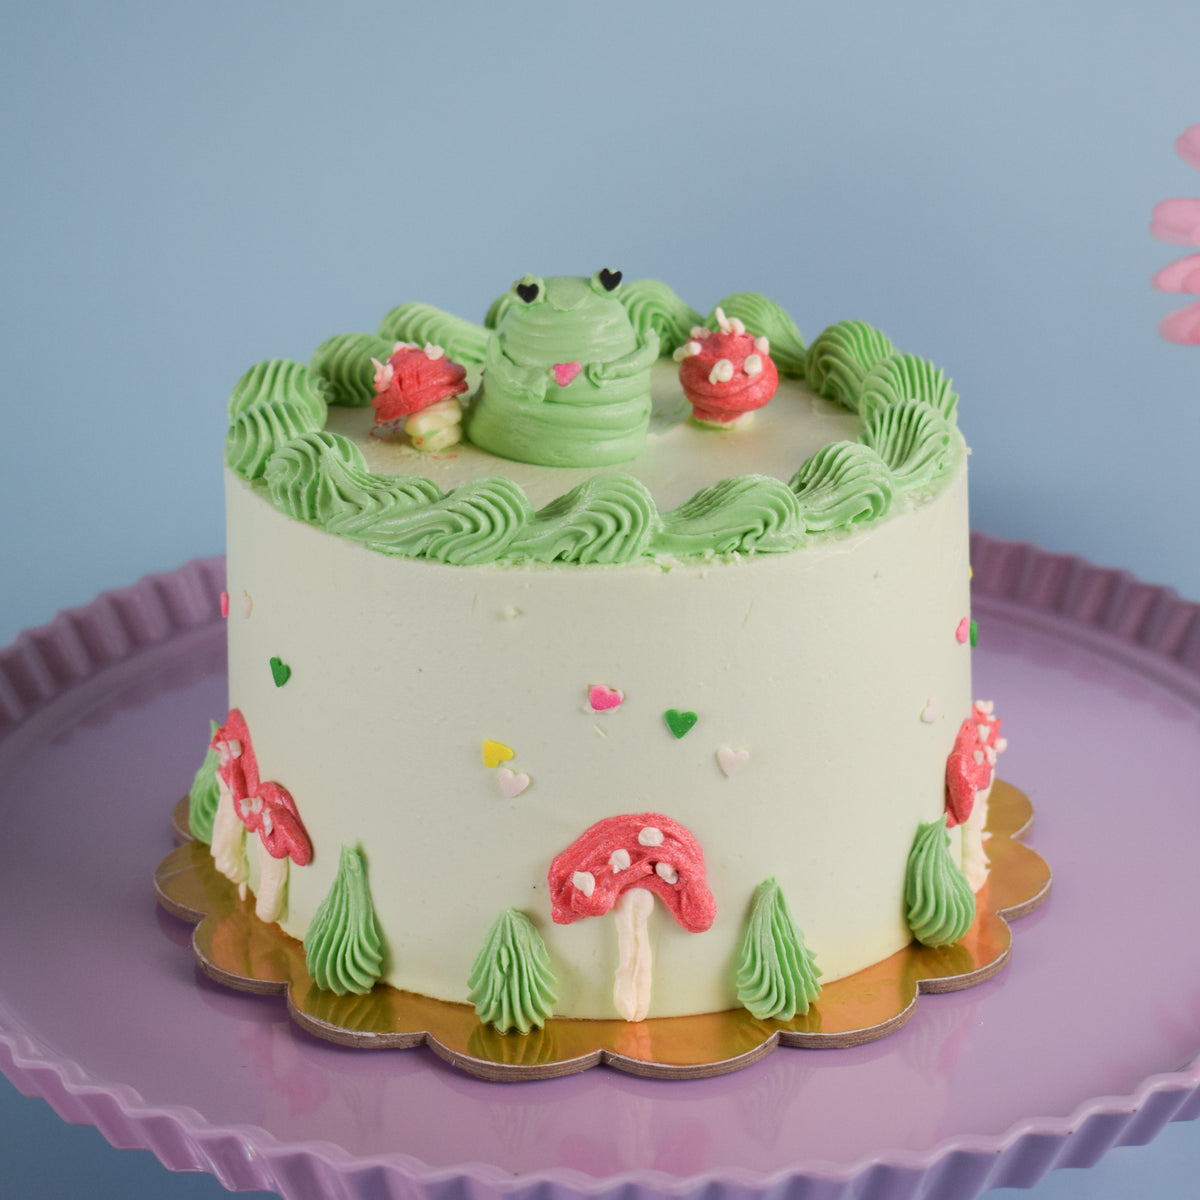 Frog cake - Wikipedia